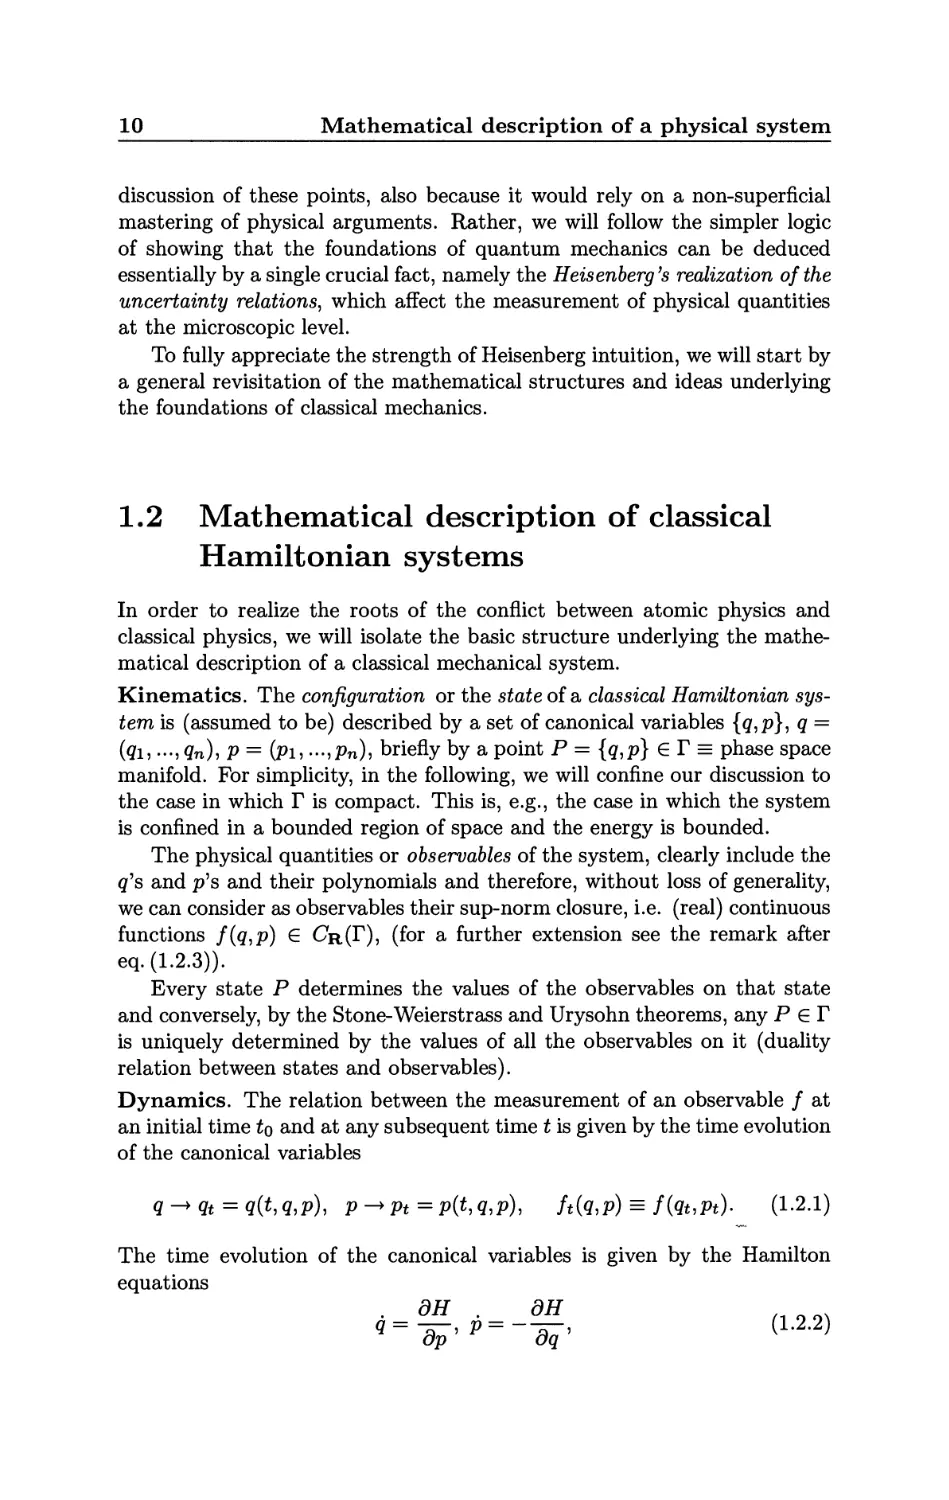 1.2 Mathematical description of classical Hamiltonian systems